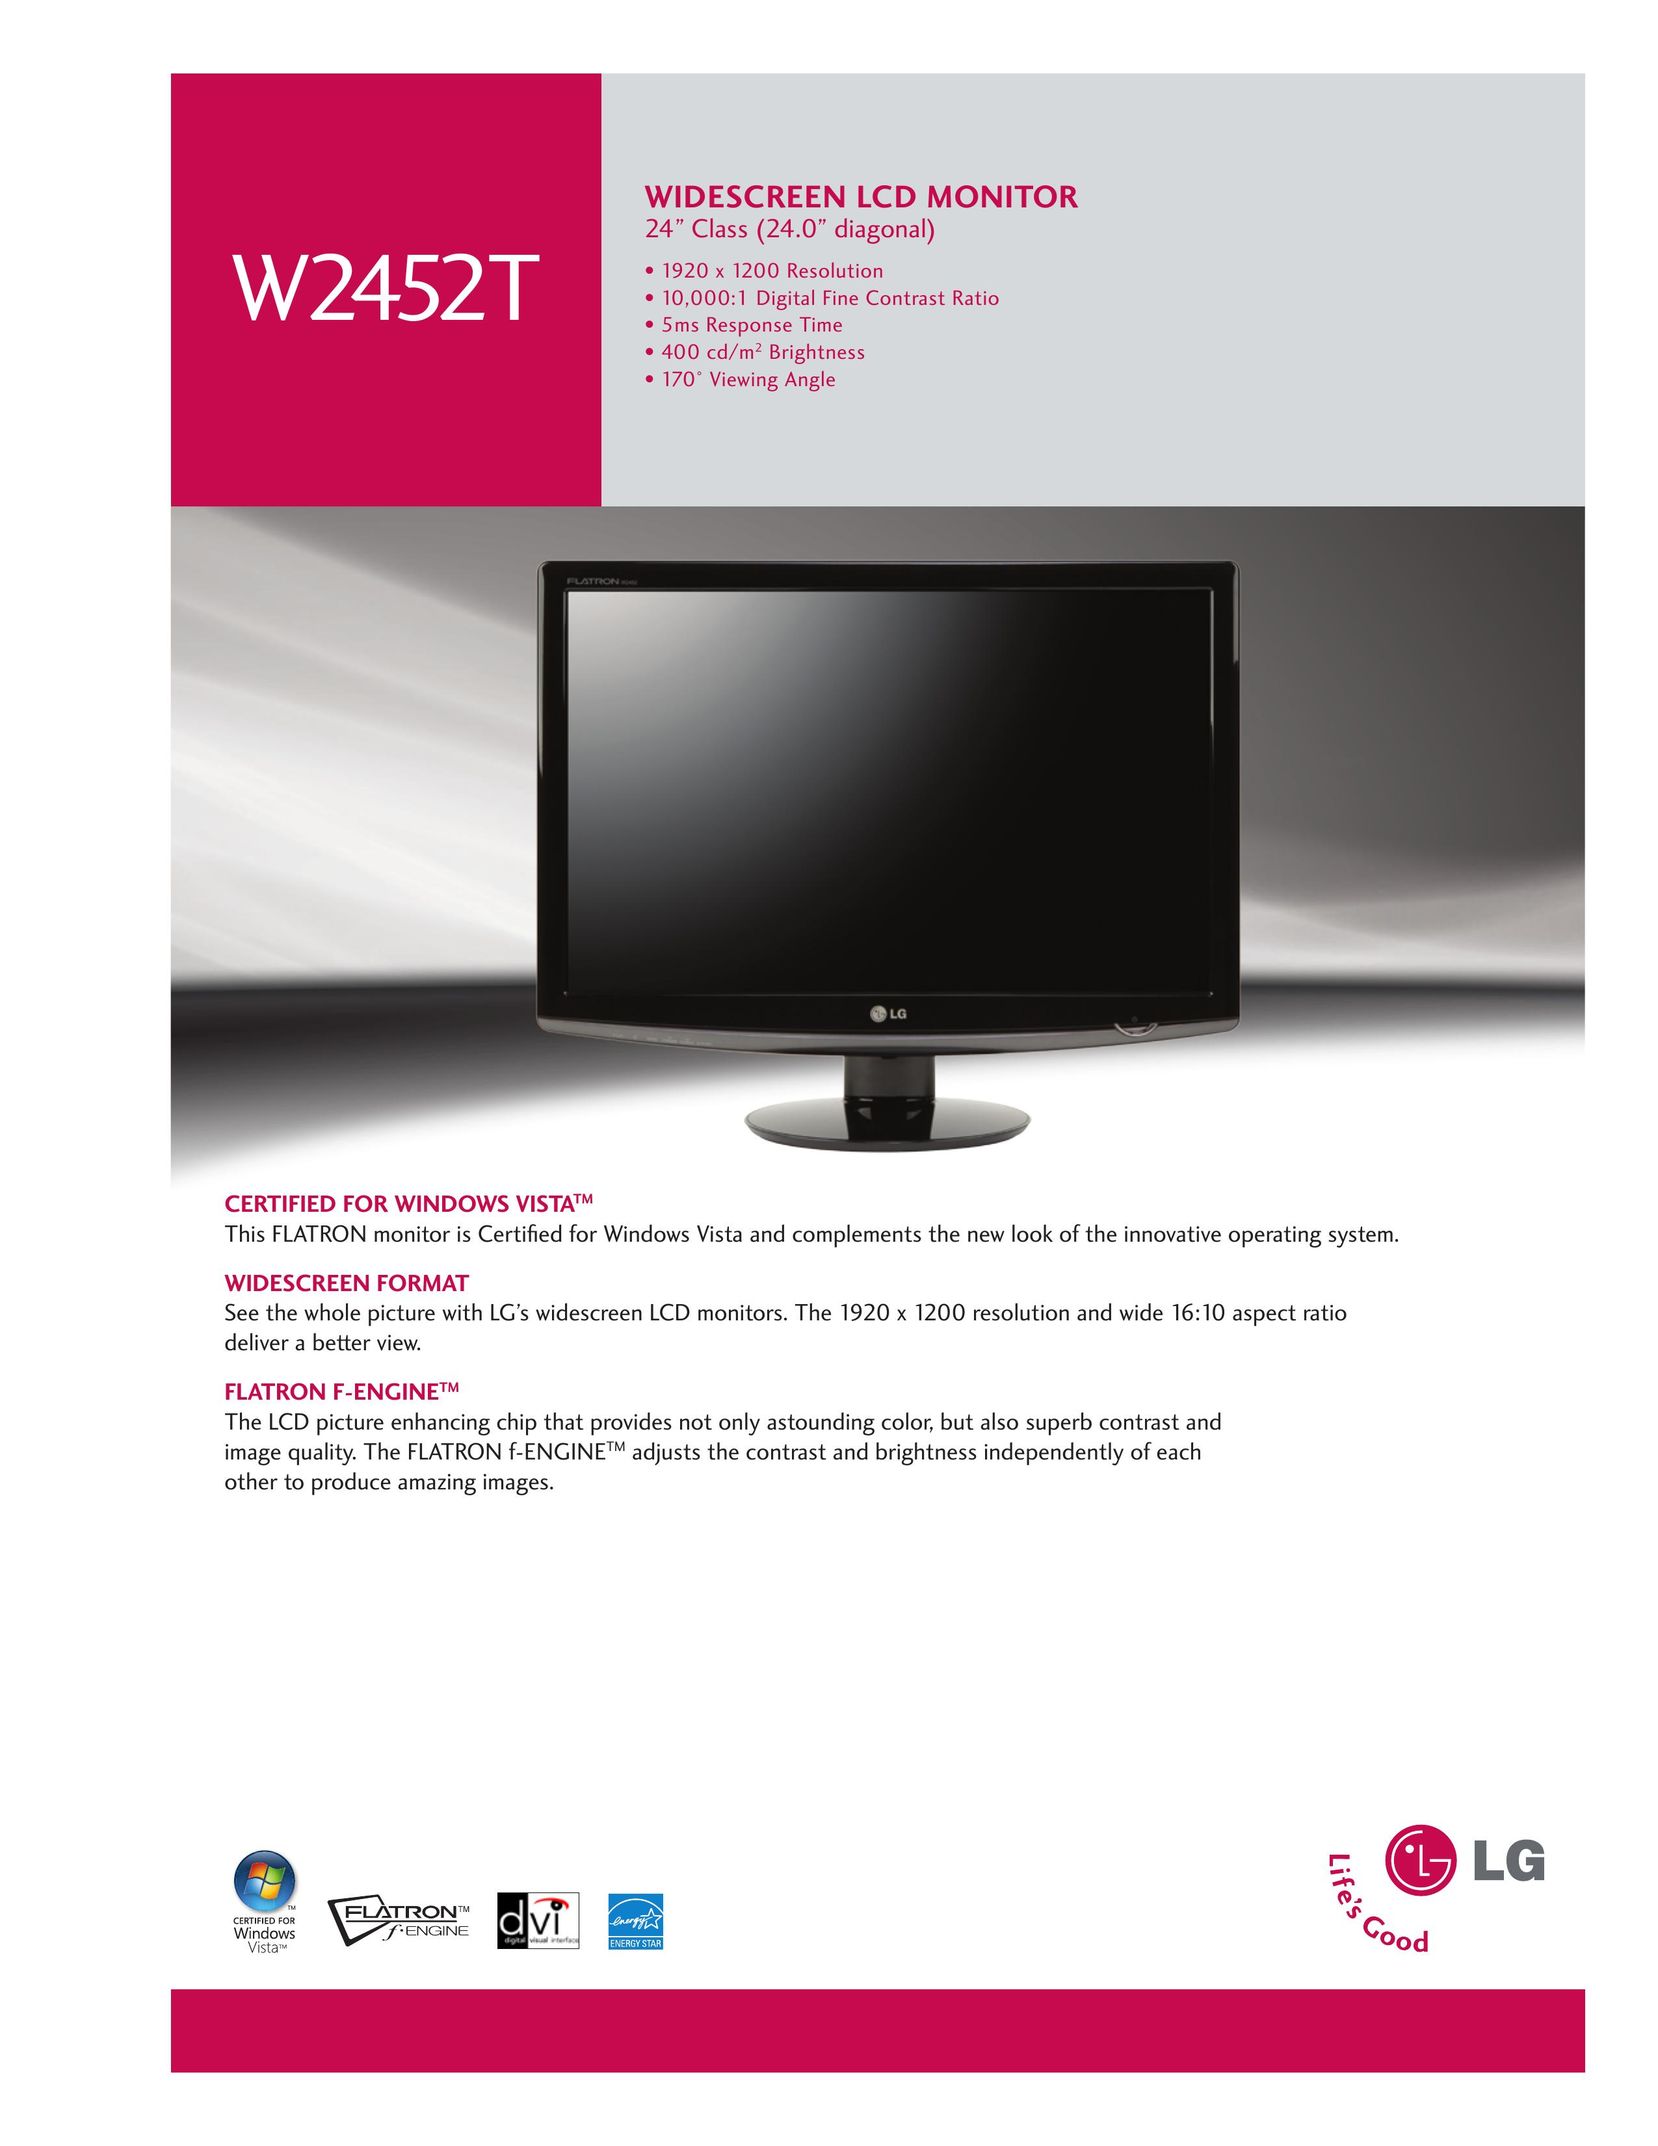 Goldstar W2452T Computer Monitor User Manual